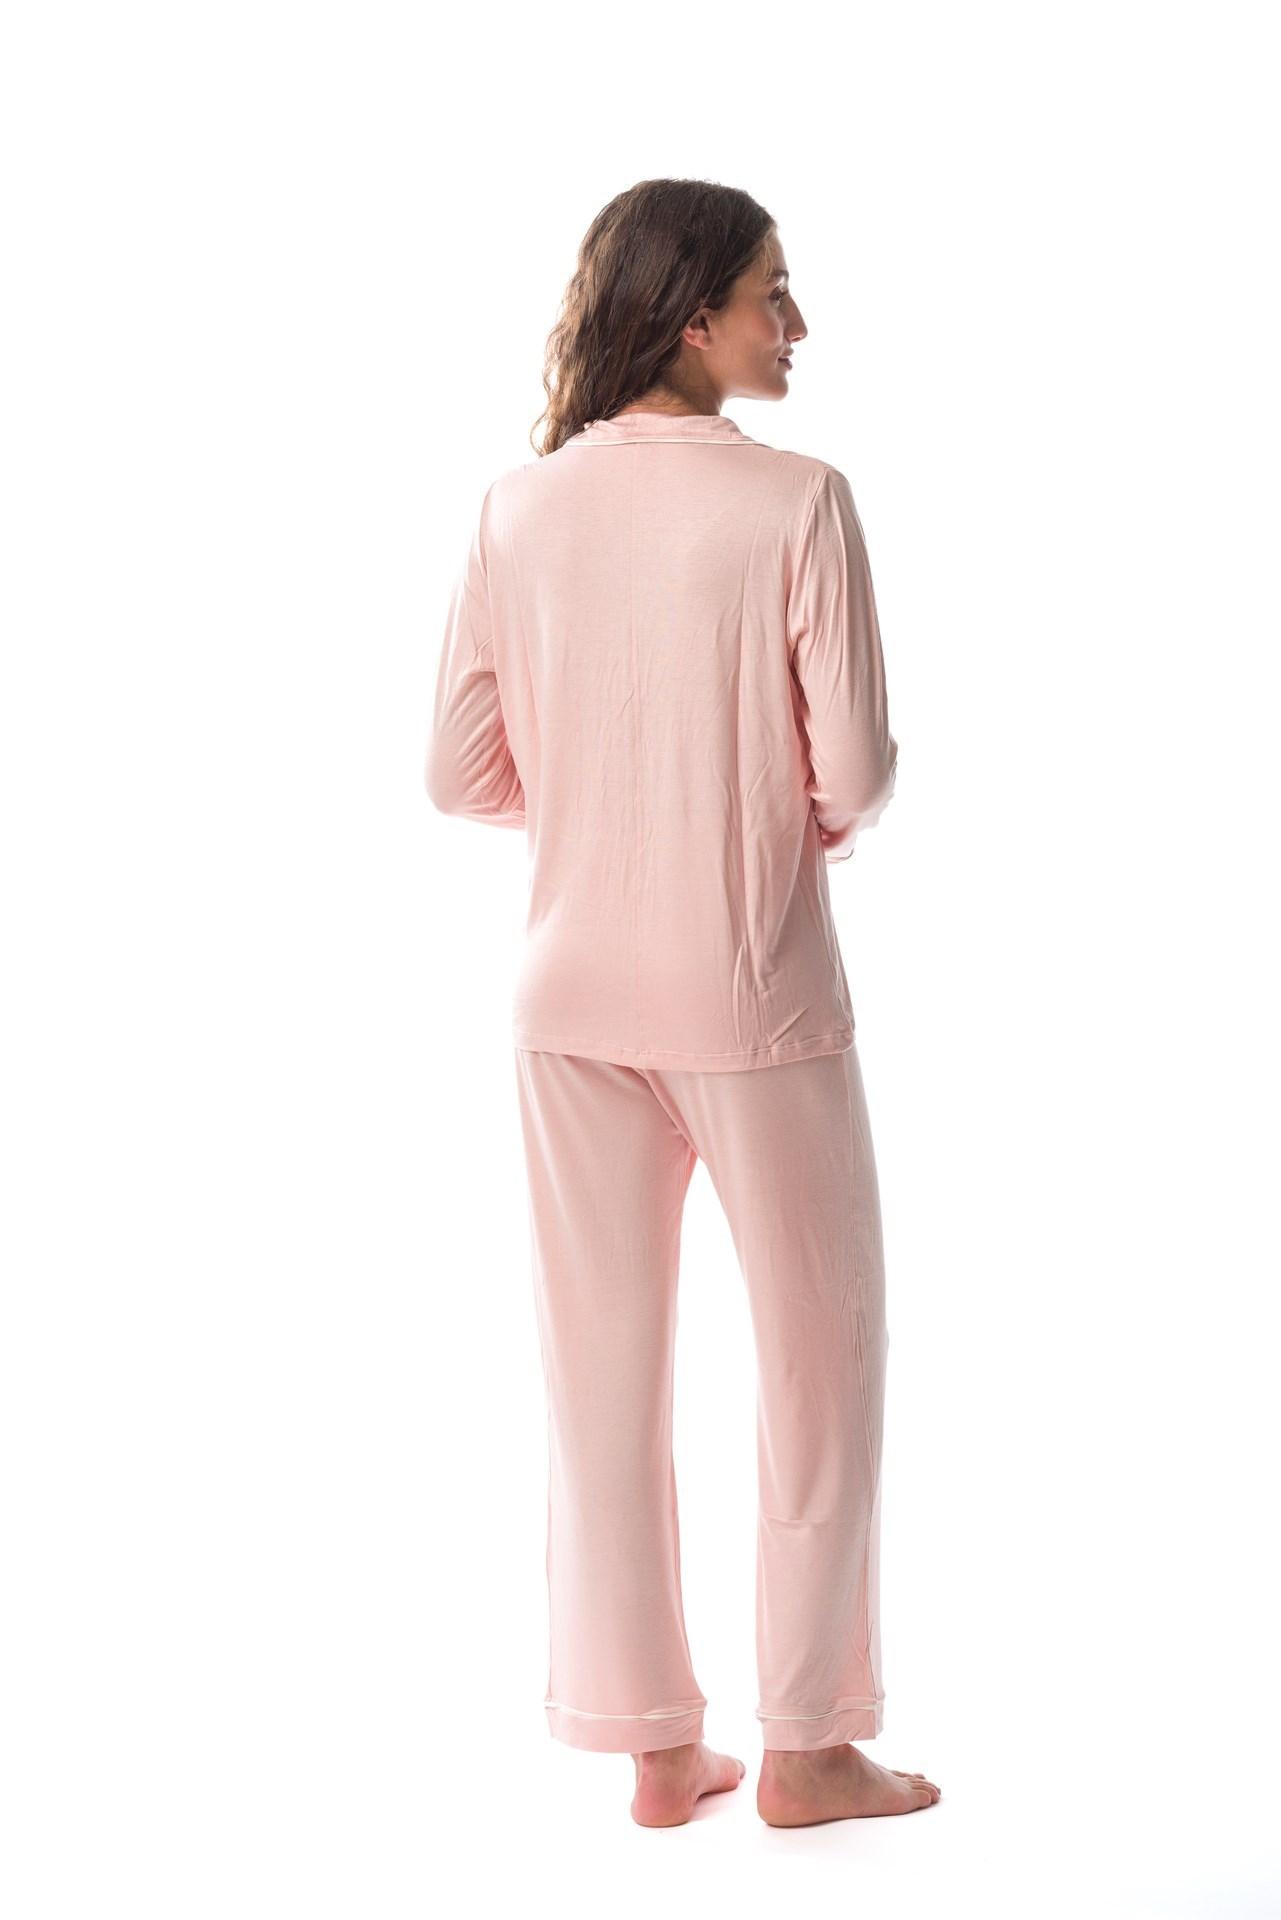 Donatella - Pijama Camisero Largo rosado pastel s